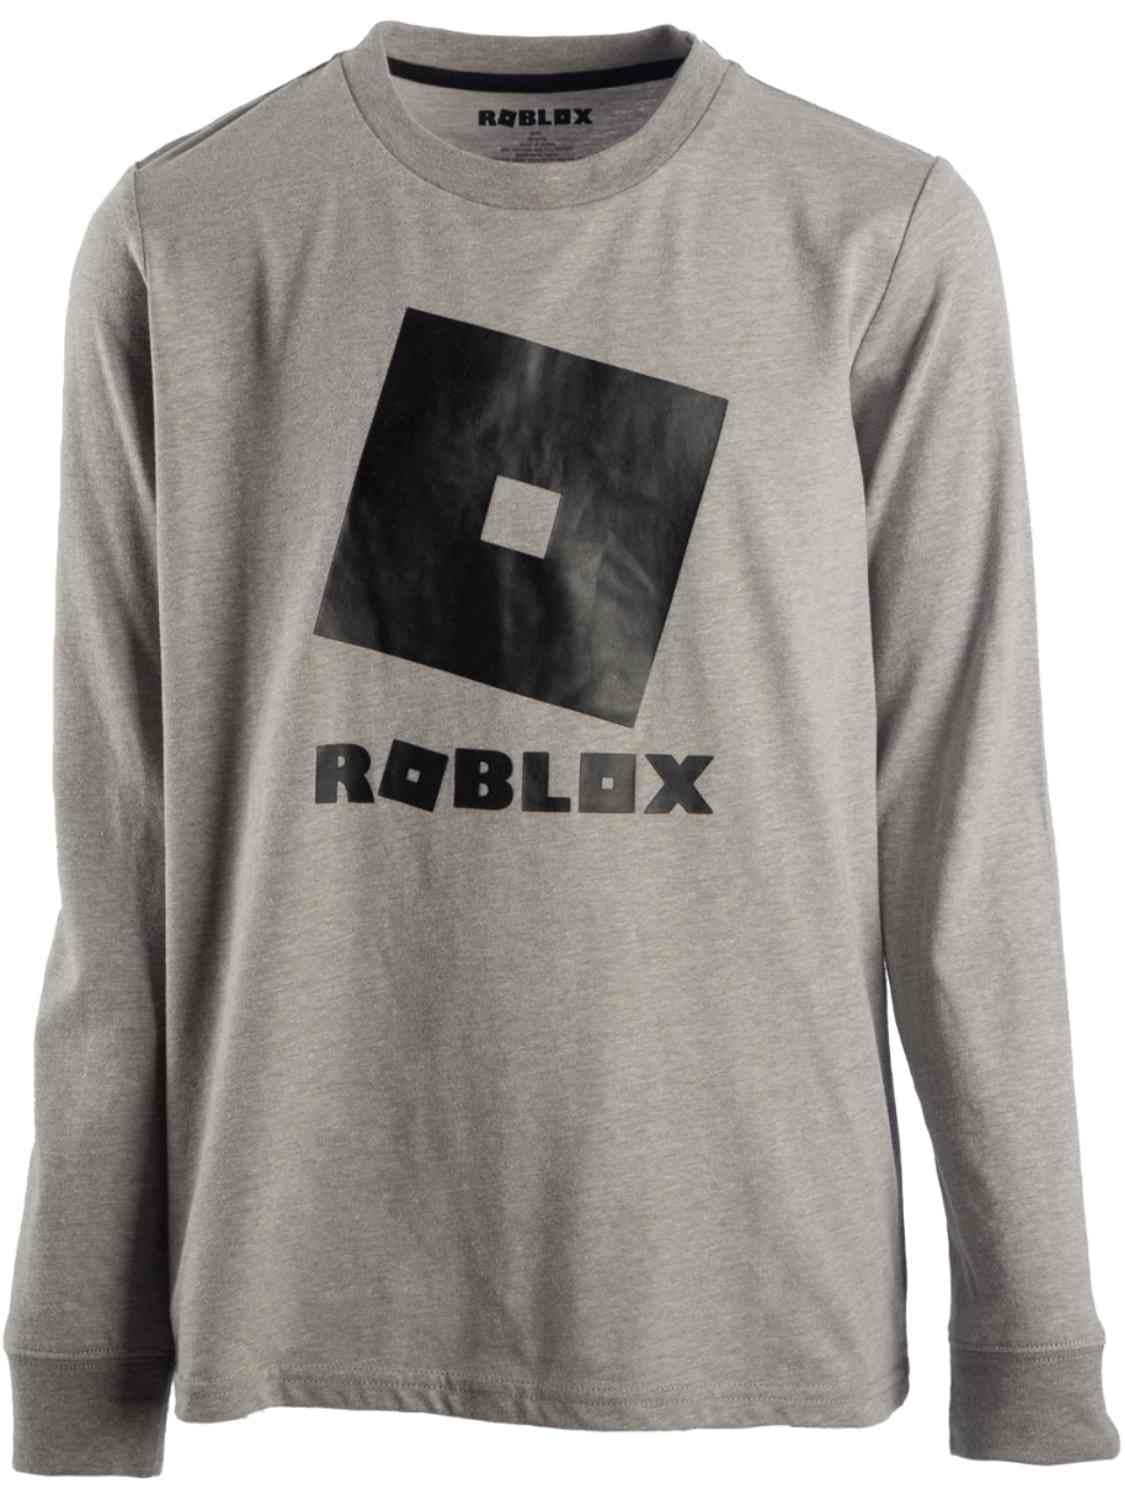 Boys Gray Black Roblox T Shirt Long Sleeve Tee Shirt Walmart Com Walmart Com - roblox string.length